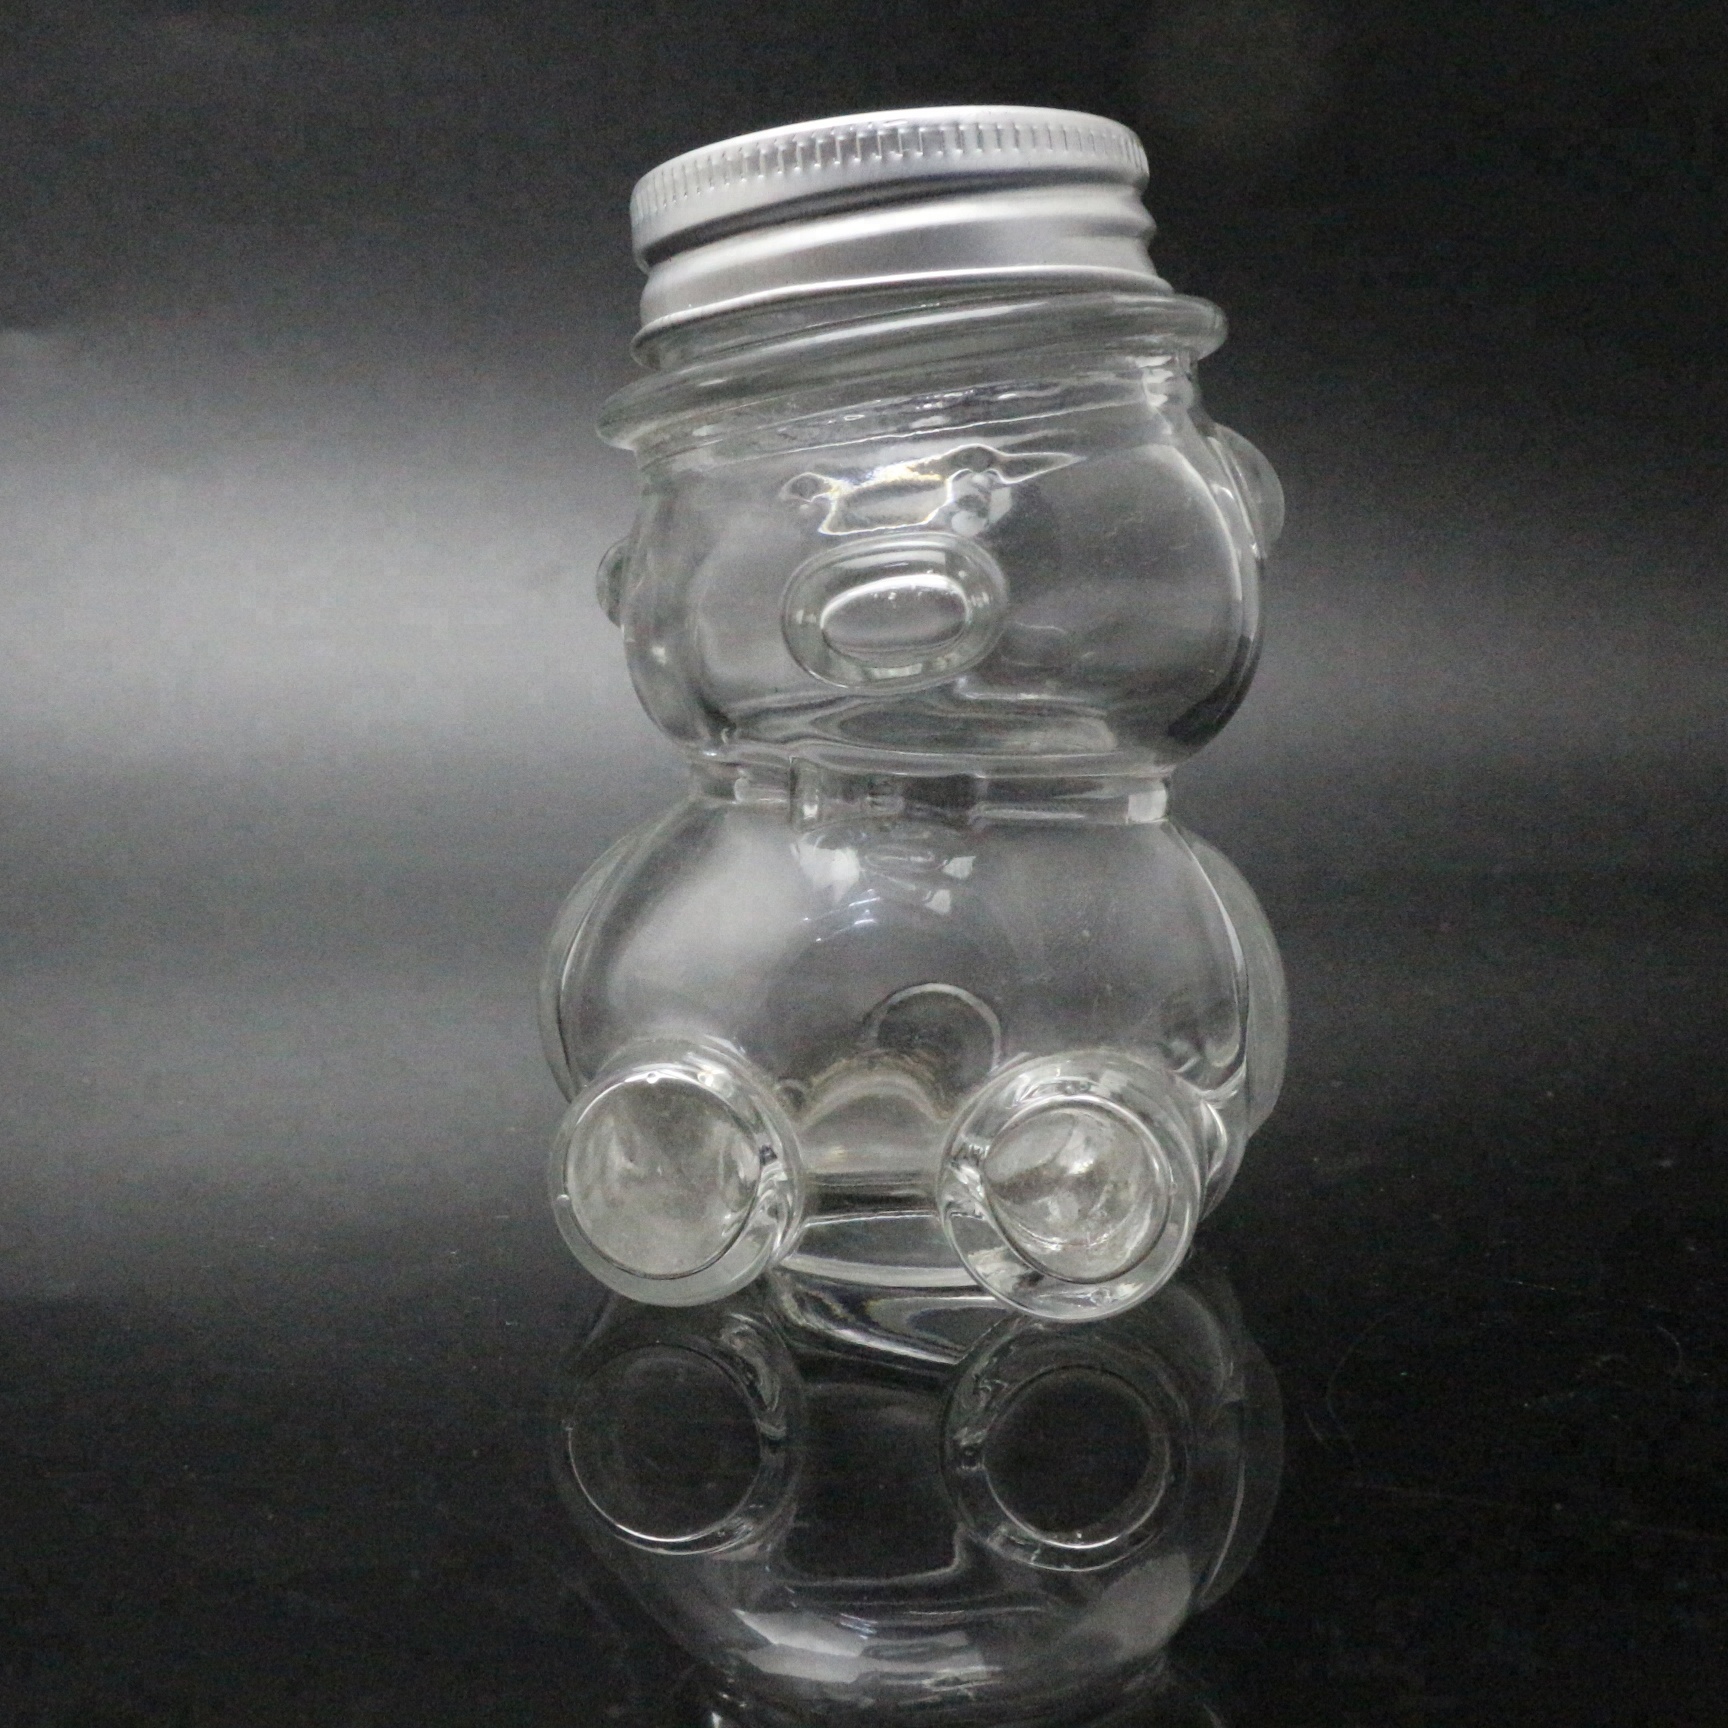 9 oz Honey Bear Waxonxa Glass Jar Glass Bottle Nge Black White Gold Metal Lid